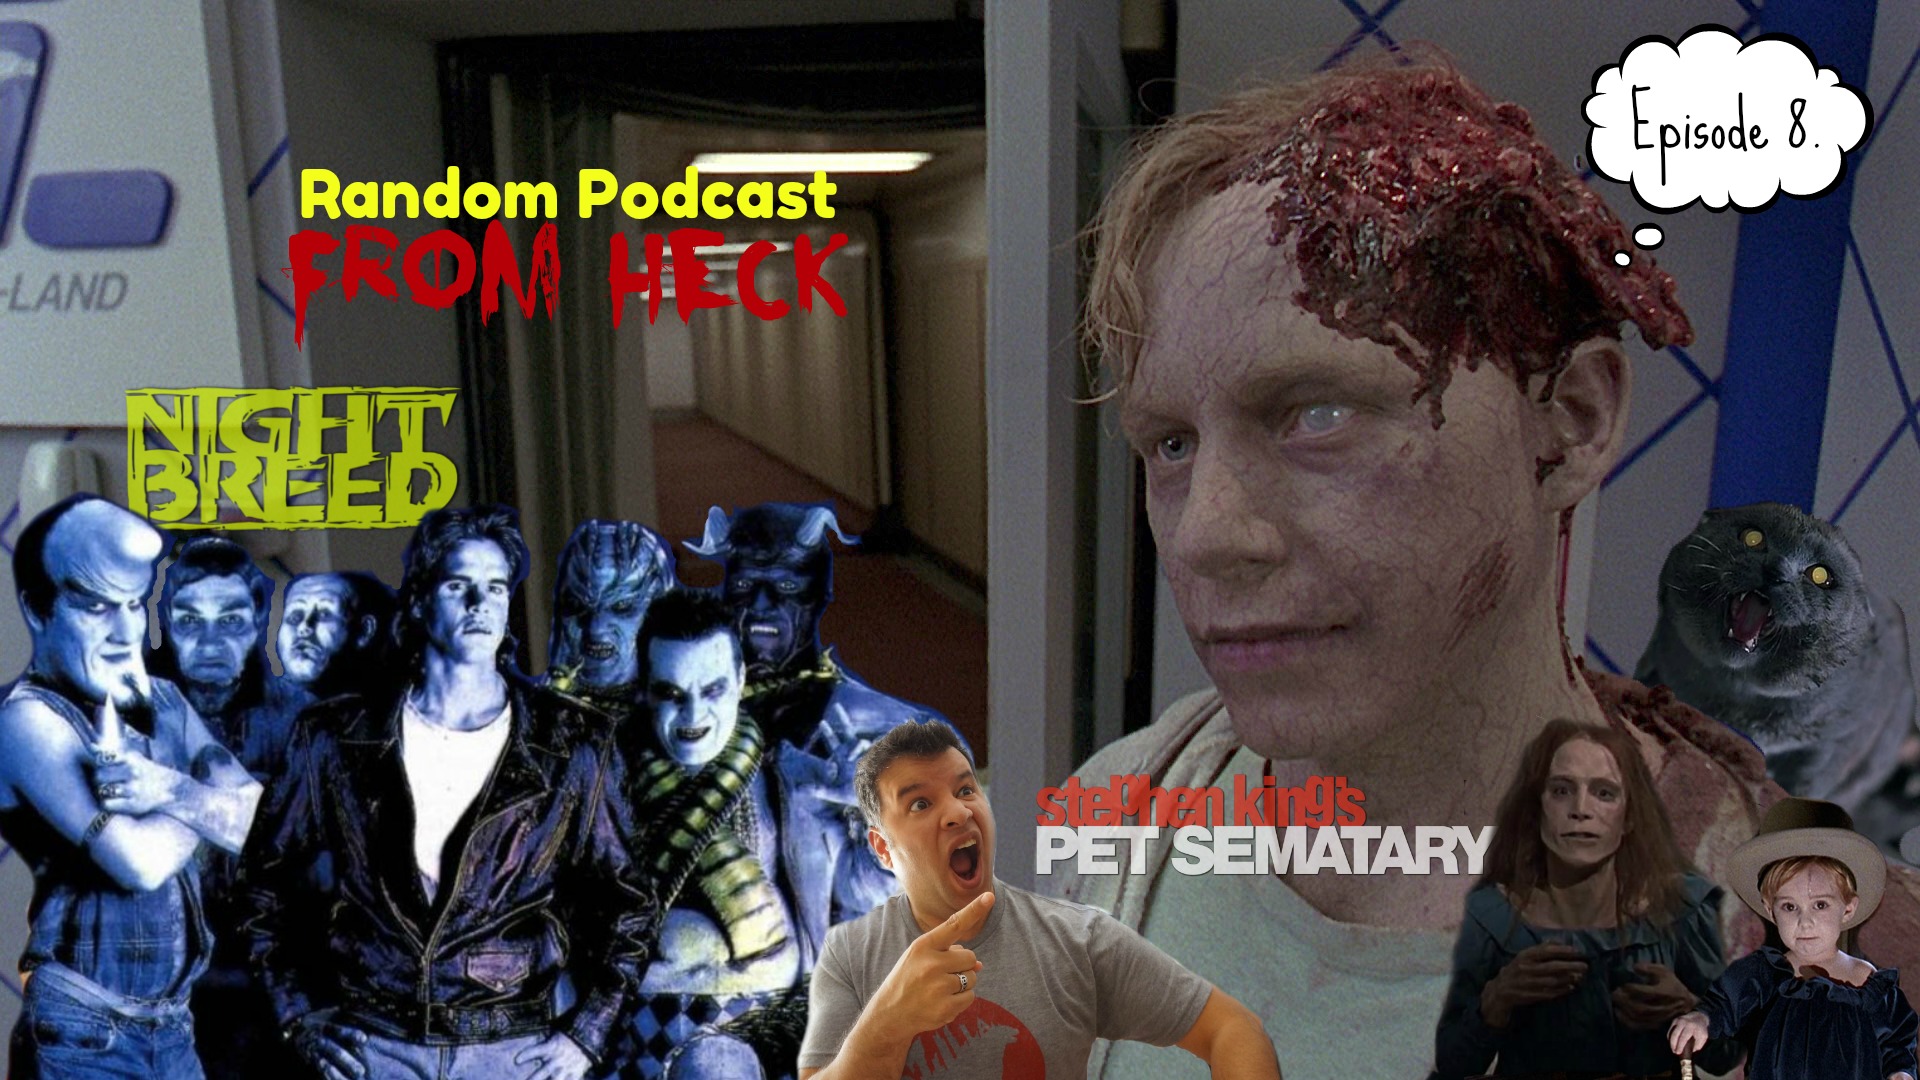 Episode 8 - Pet Sematary, Nightbreed, Plus TV And Comic Recaps